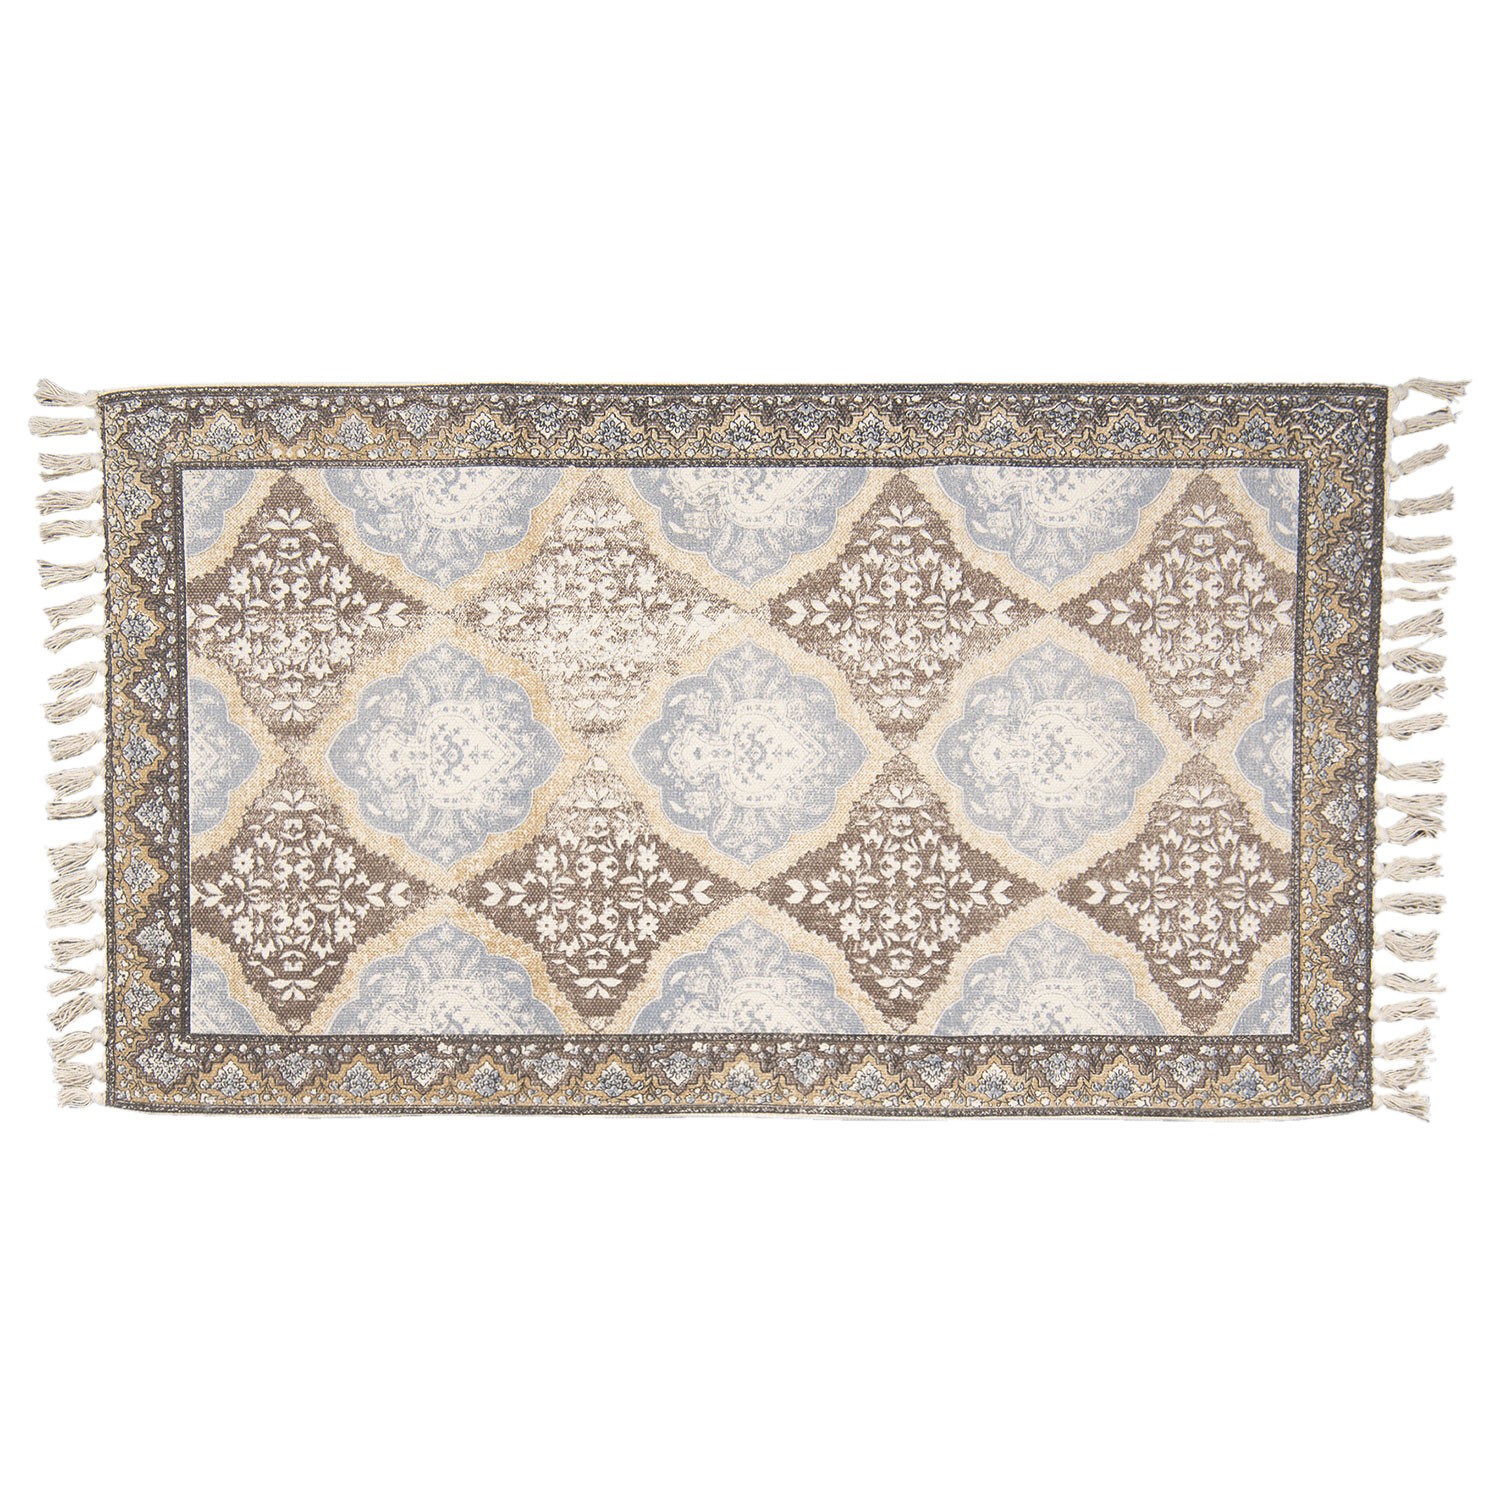 Hnědo-modrý bavlněný koberec s ornamenty a třásněmi- 140*200 cm Clayre & Eef